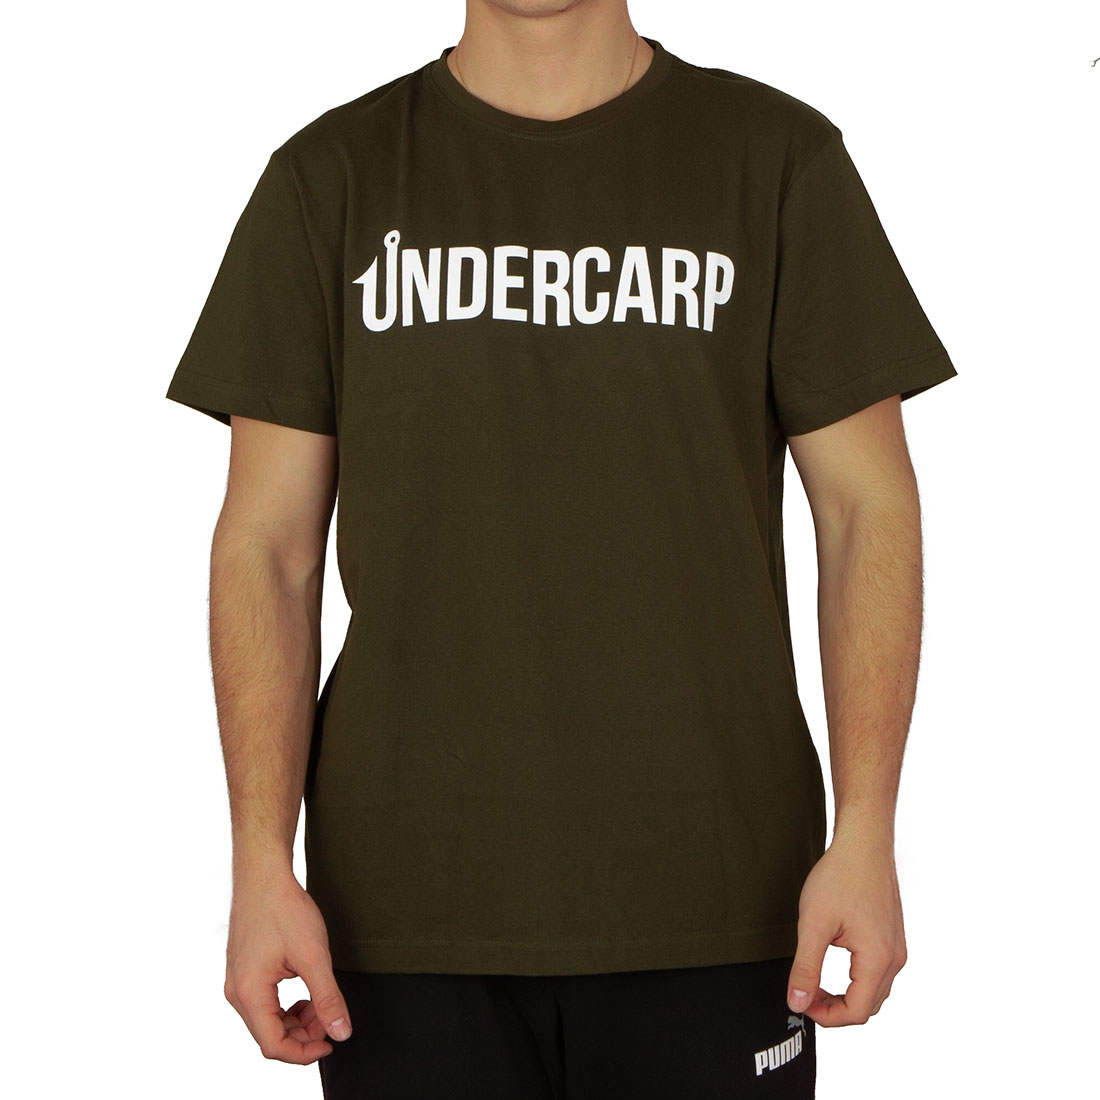 undercarp T-shirt for a fisherman